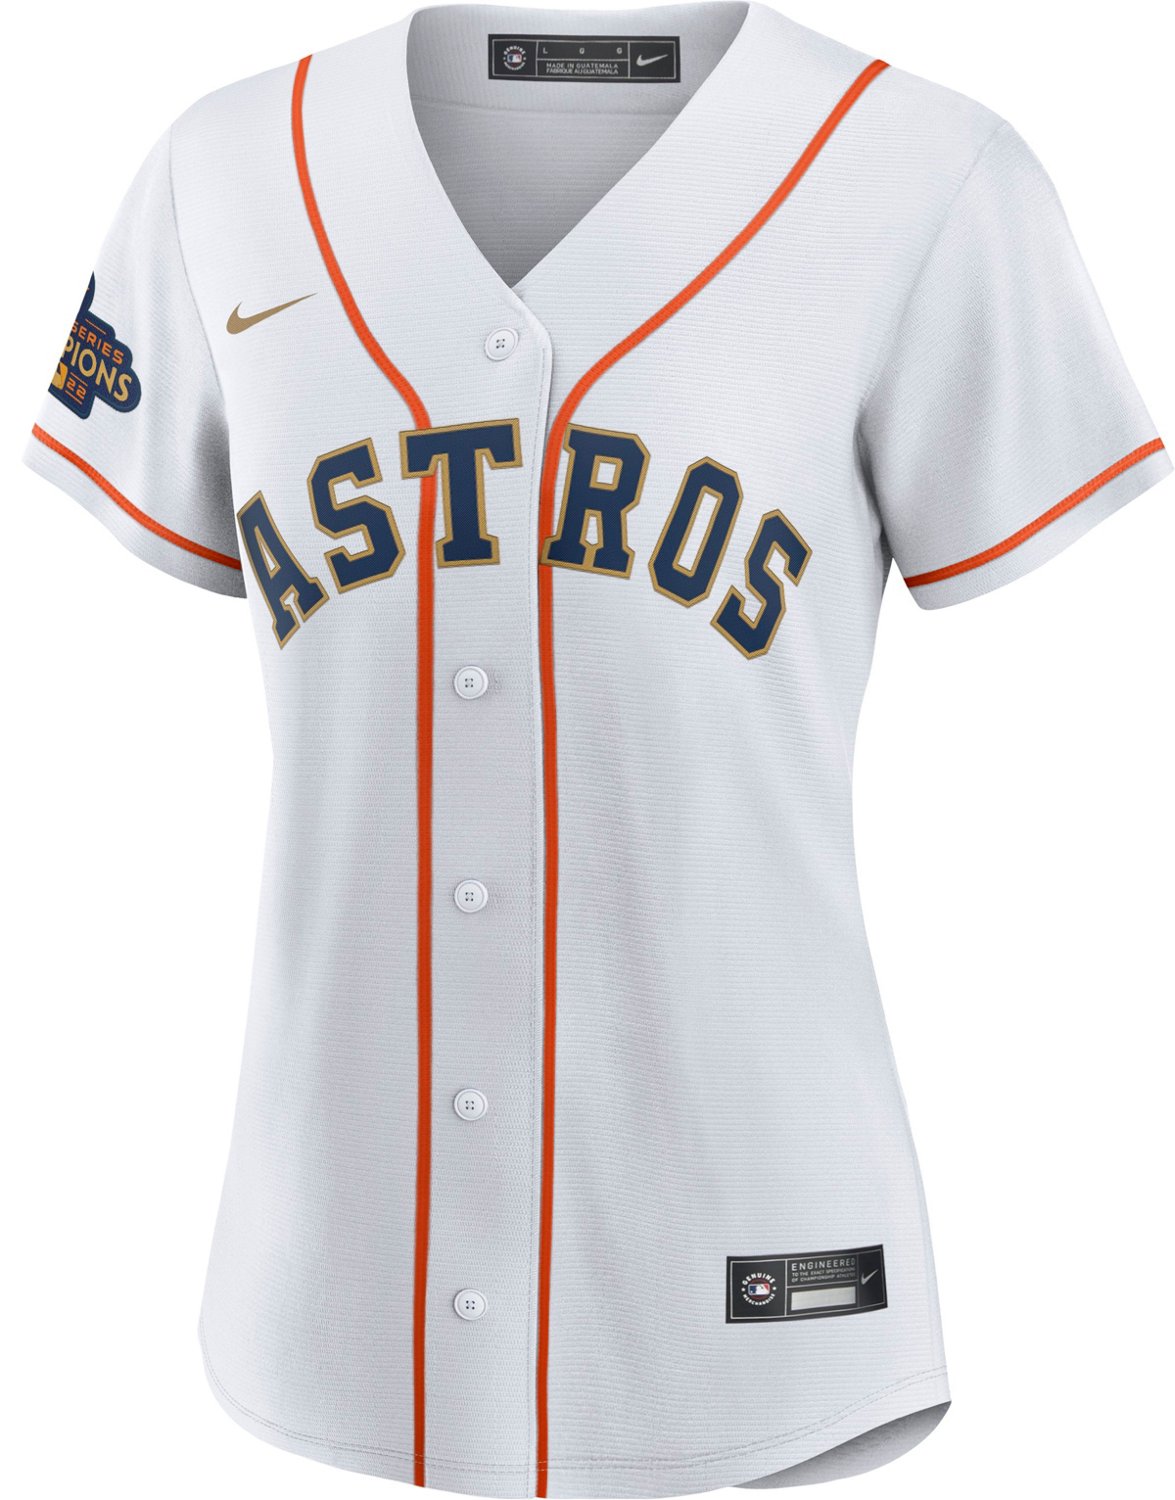 Women's Houston Skyline Astros Baseball Shirt — Trudy's Hallmark